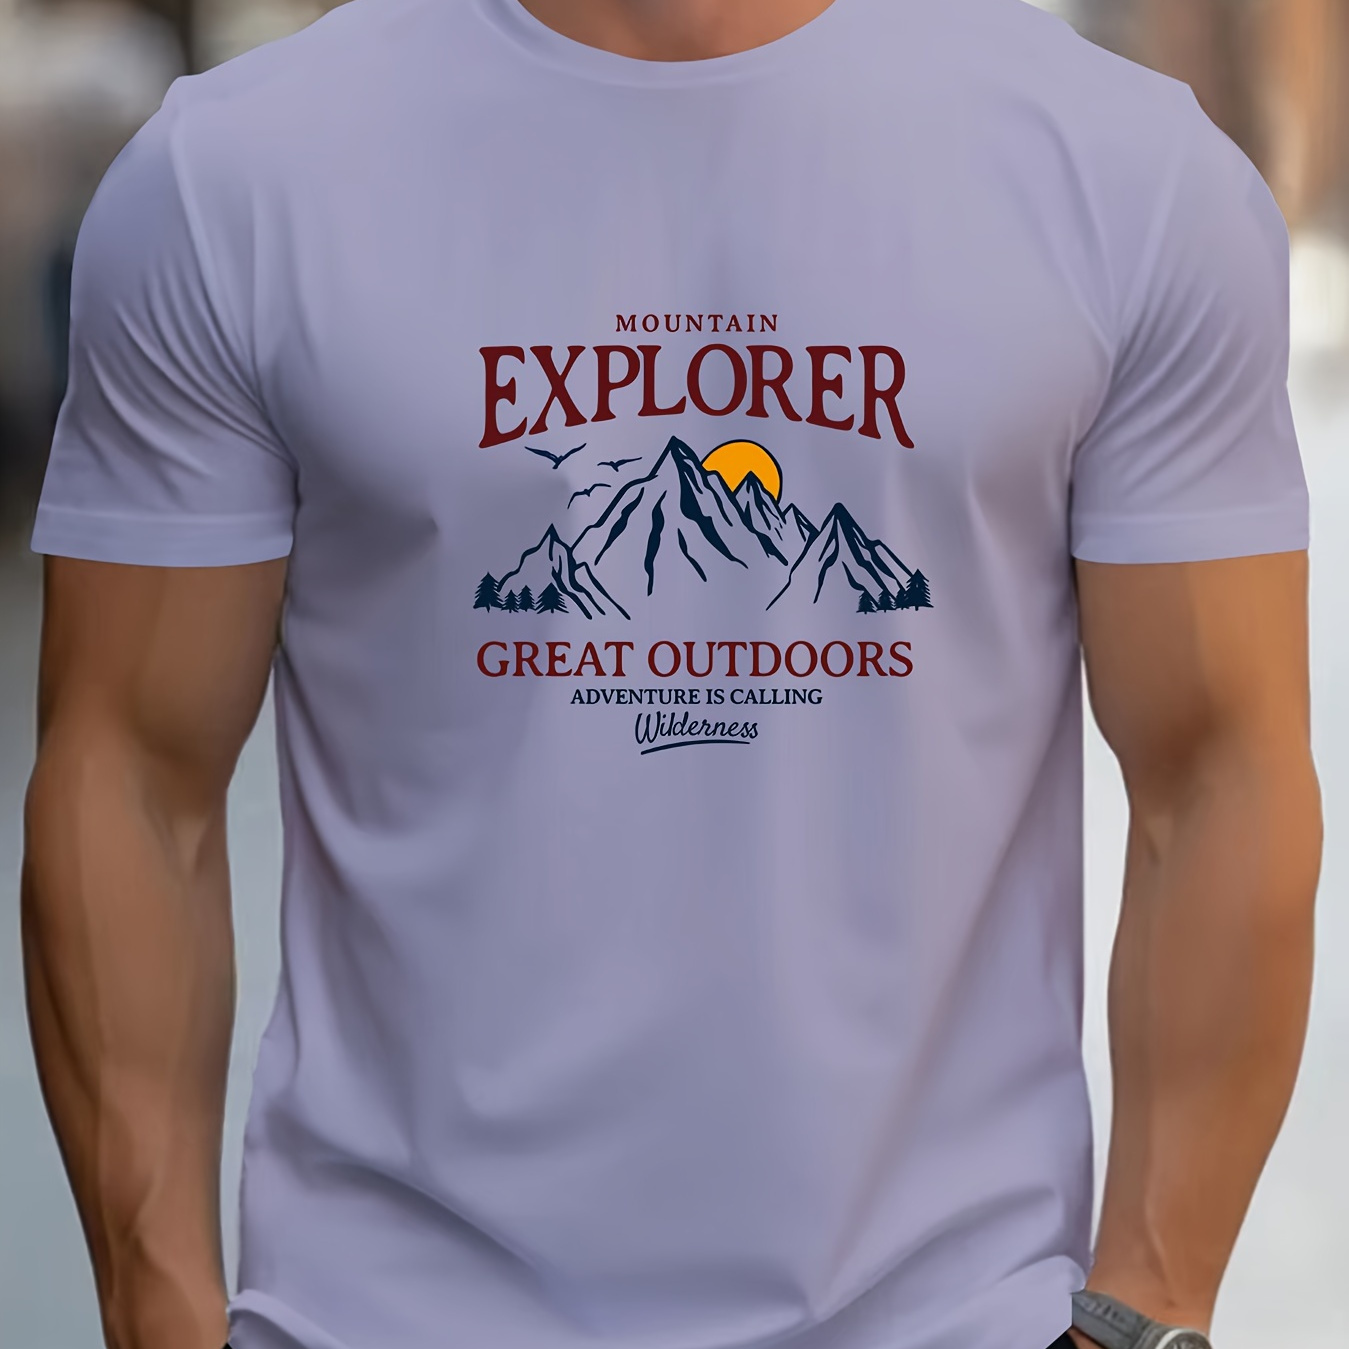 

Mountain Explorer Print Tee Shirt, Tees For Men, Casual Short Sleeve T-shirt For Summer